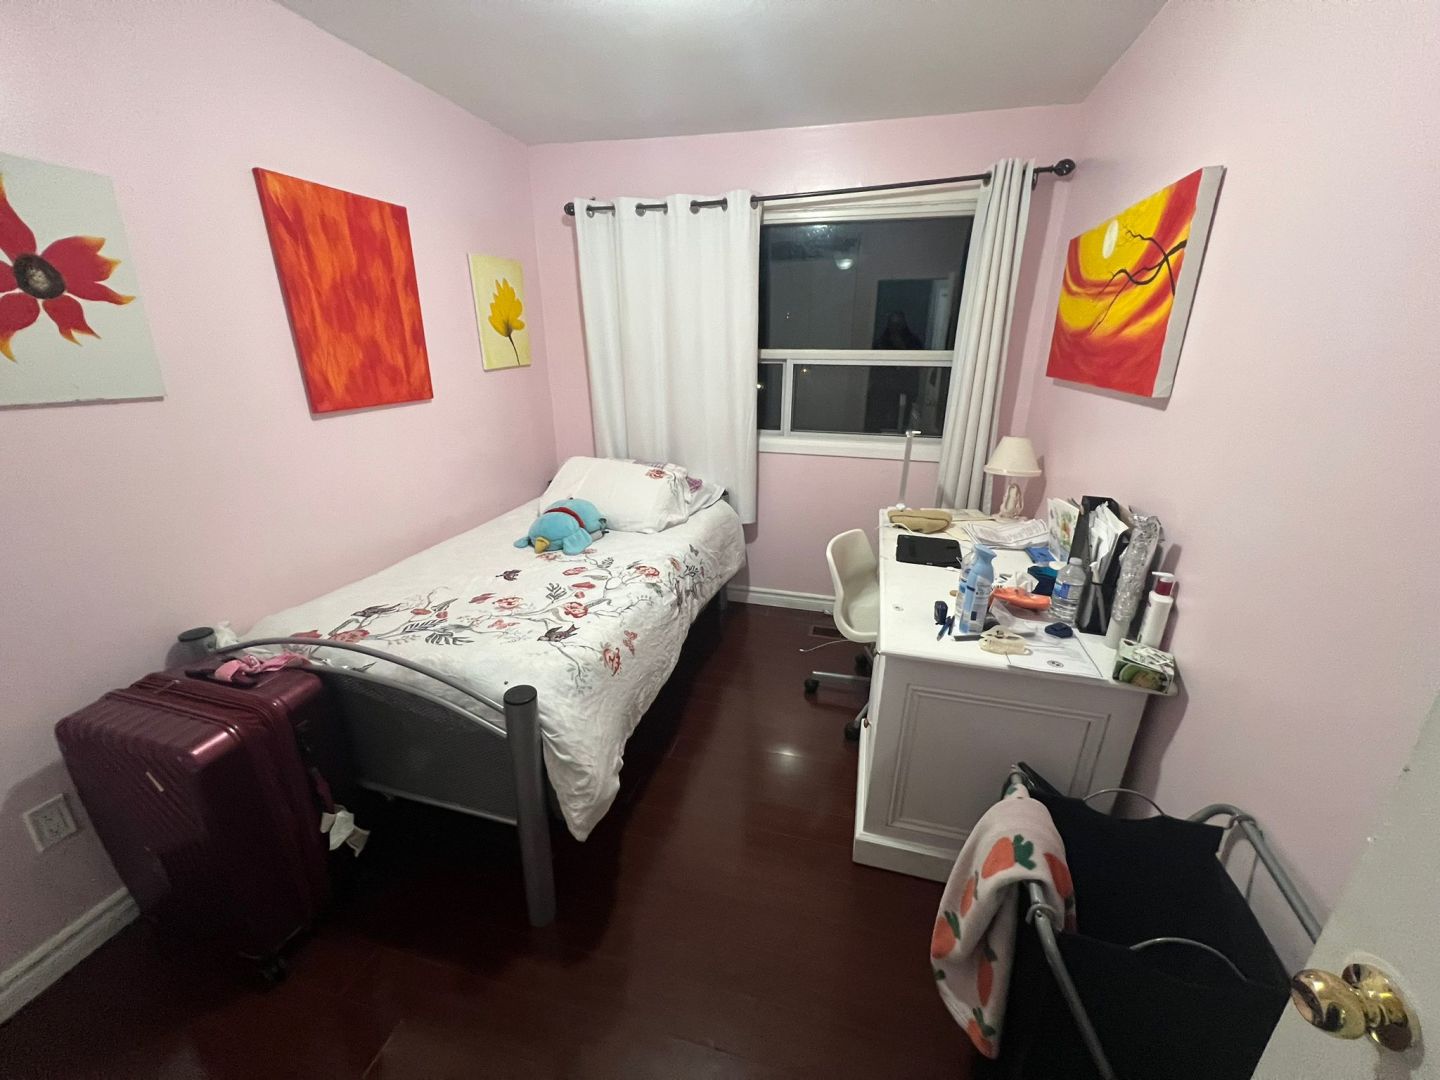 Elite Homestay Room - Dove Hawk Way, Toronto room for rent 